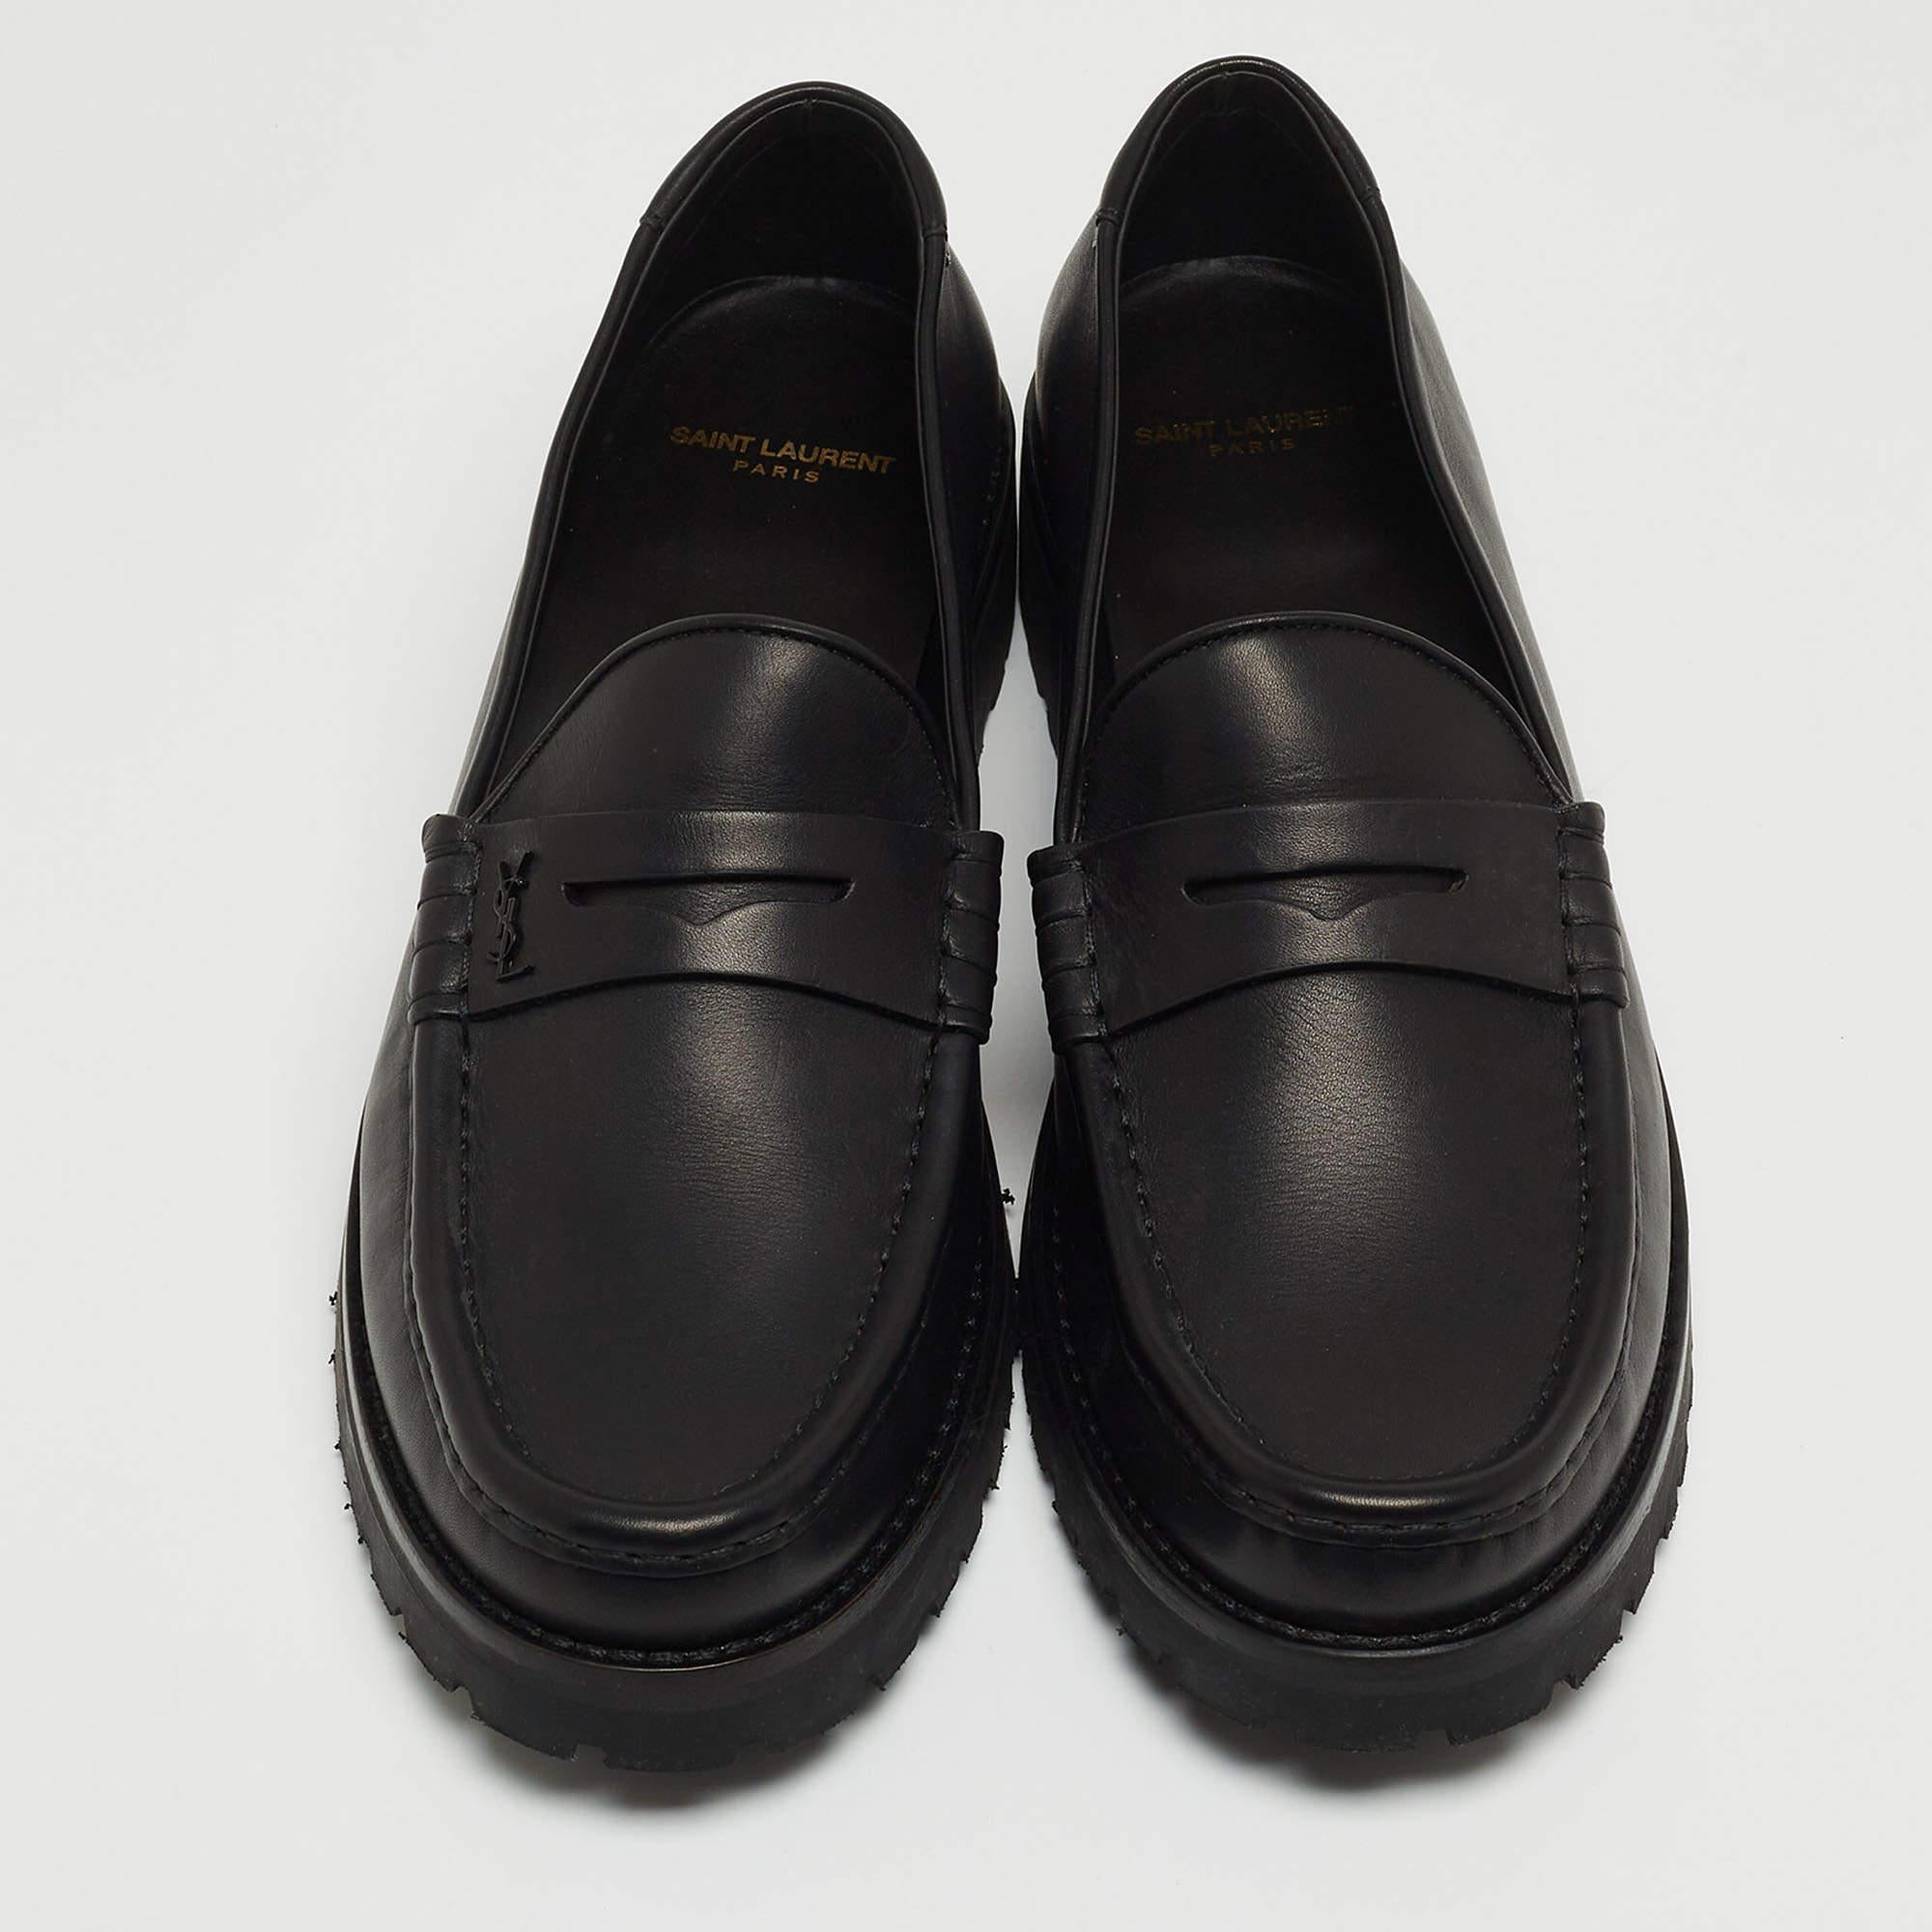 Men's Saint Laurent Black Leather Penny Slip On Loafers Size 46